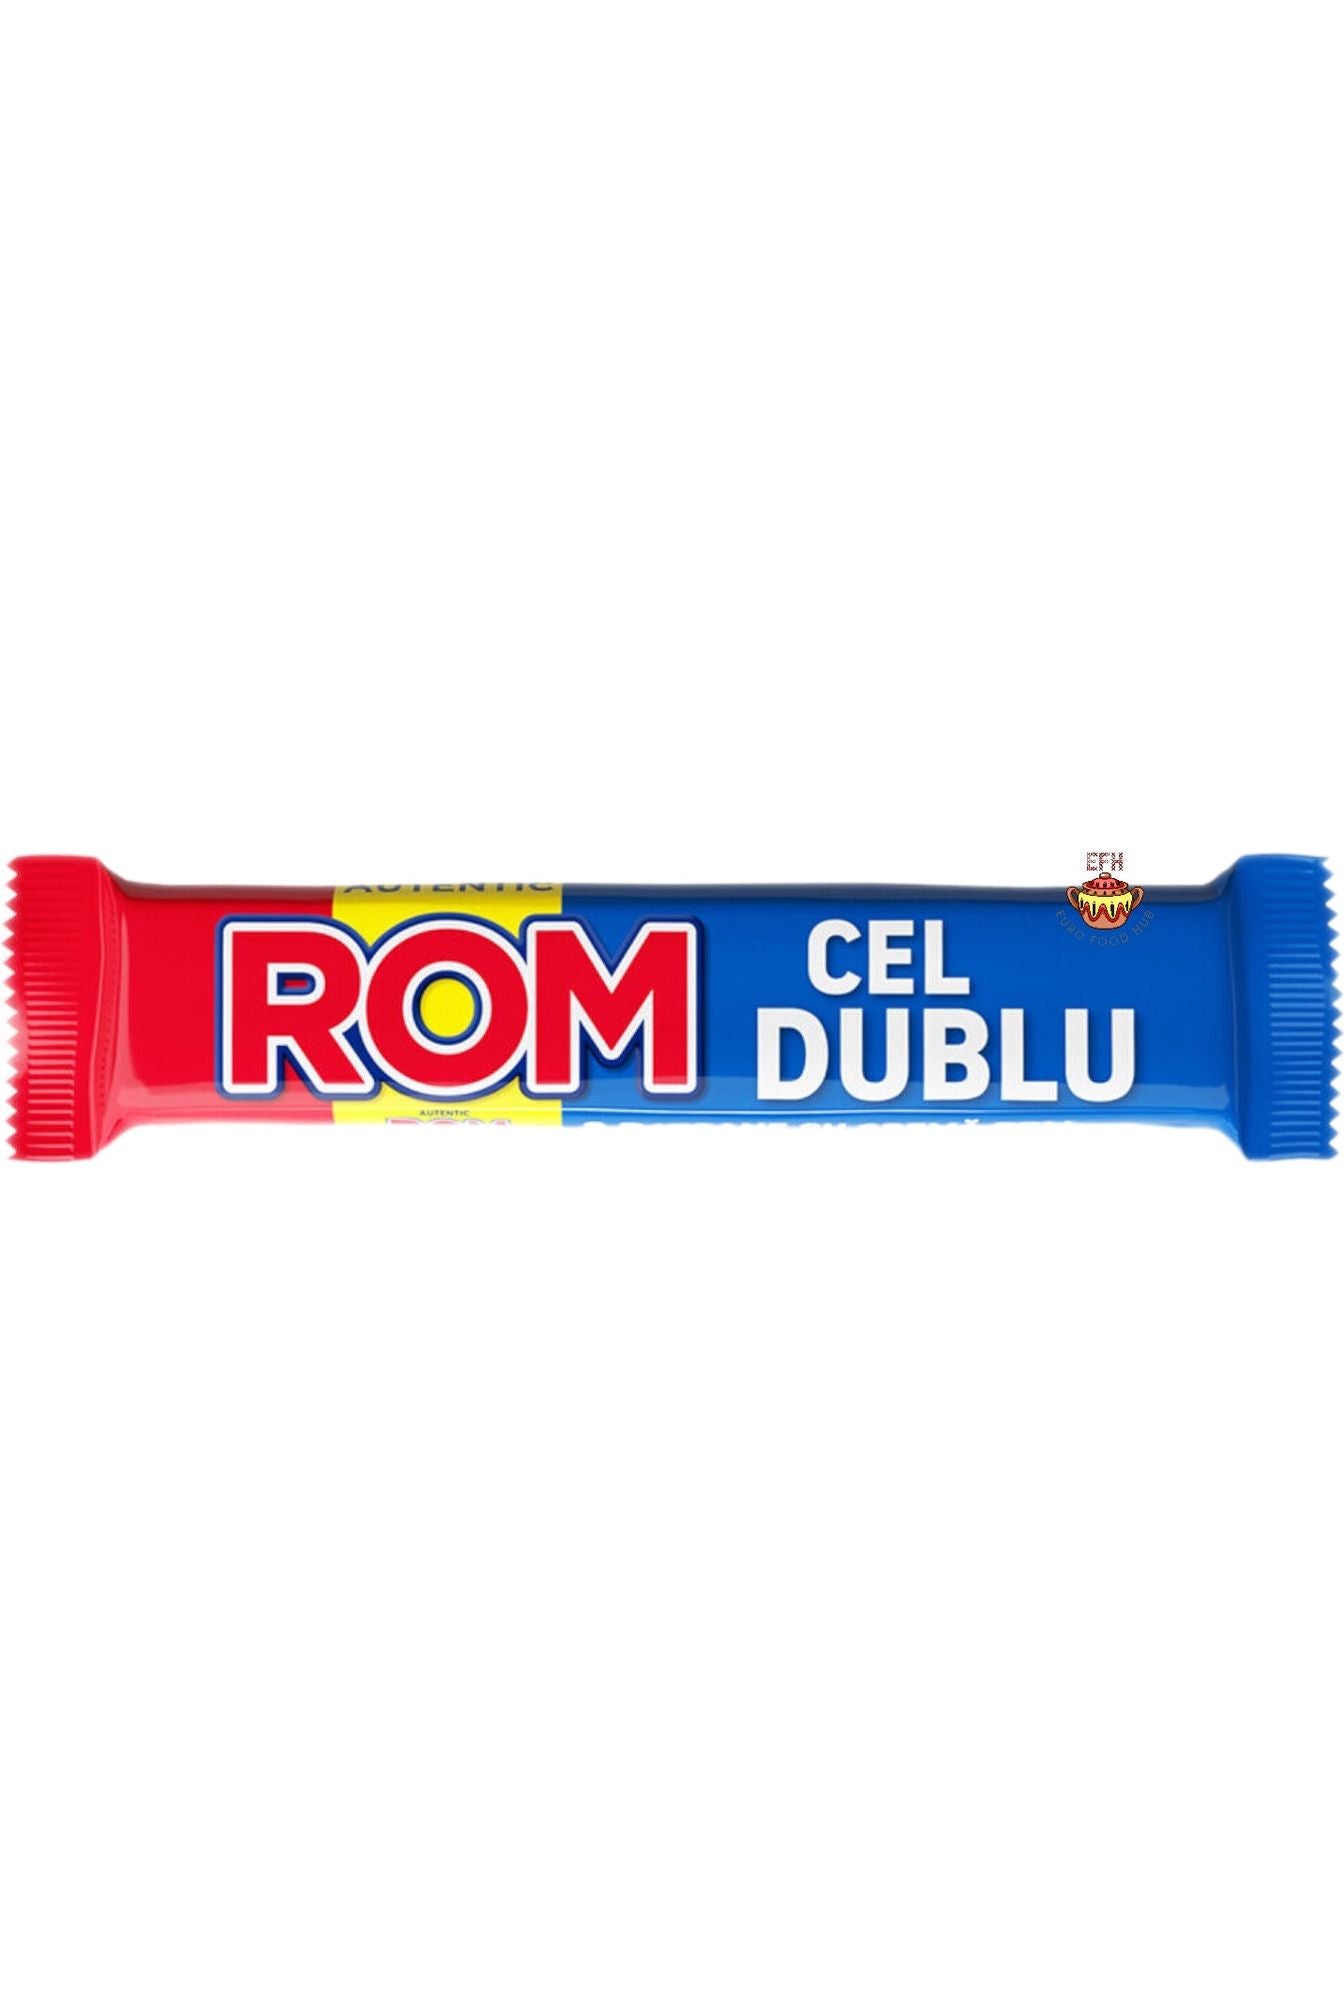 Romanian Chocolate Bar - AUTENTIC ROM CEL DUBLU